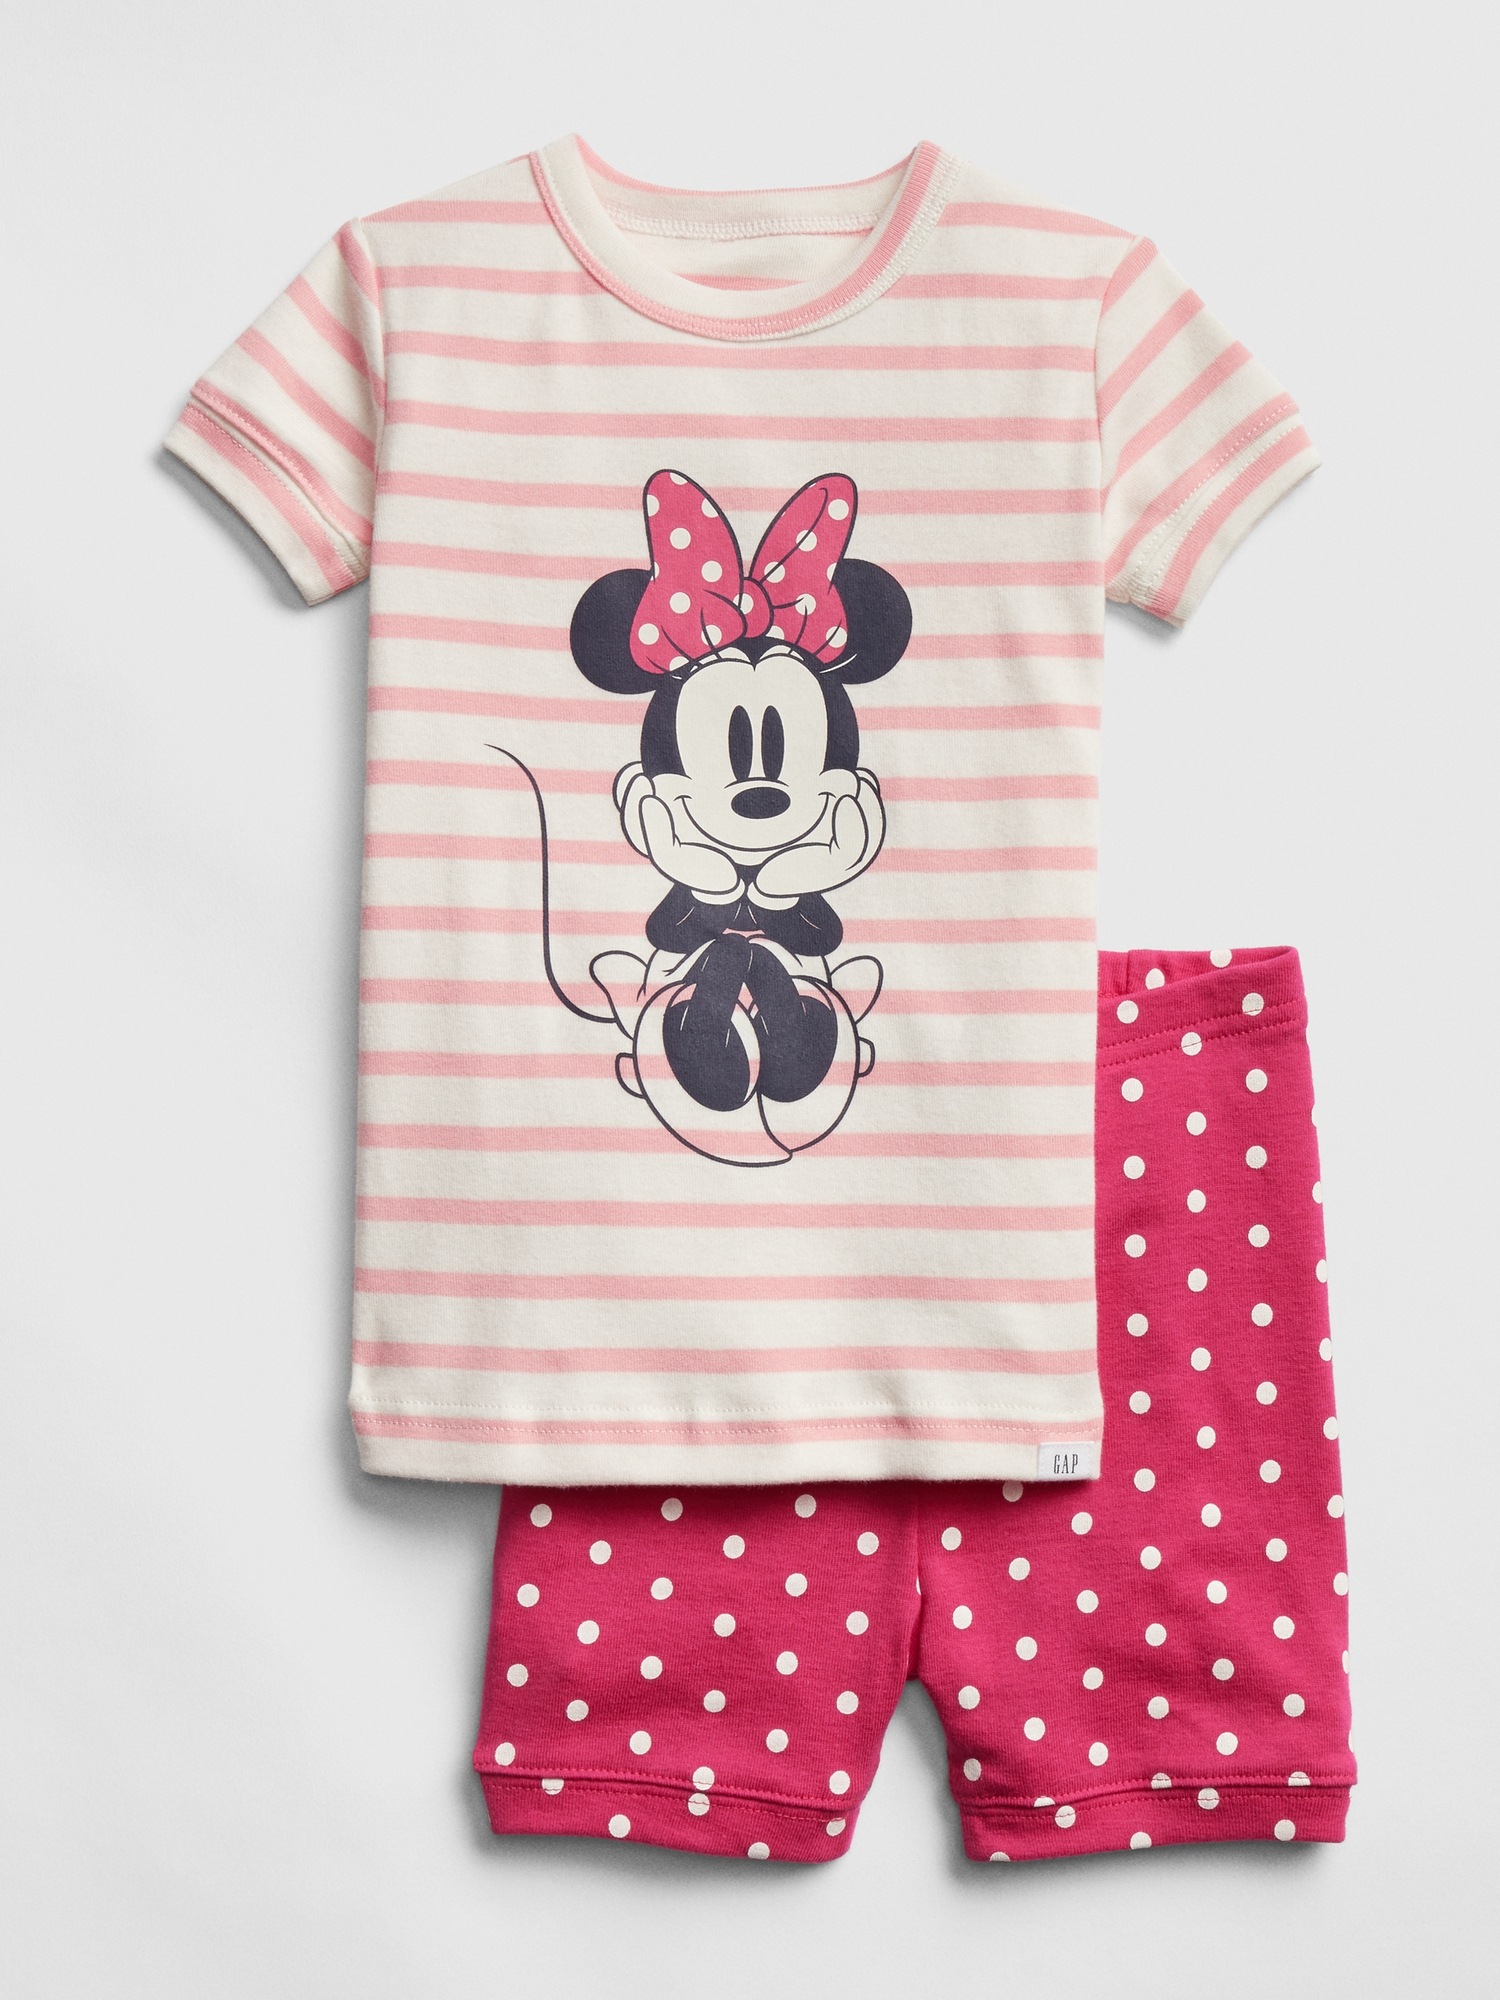 babyGap | Disney Minnie Mouse Short PJ Set | Gap